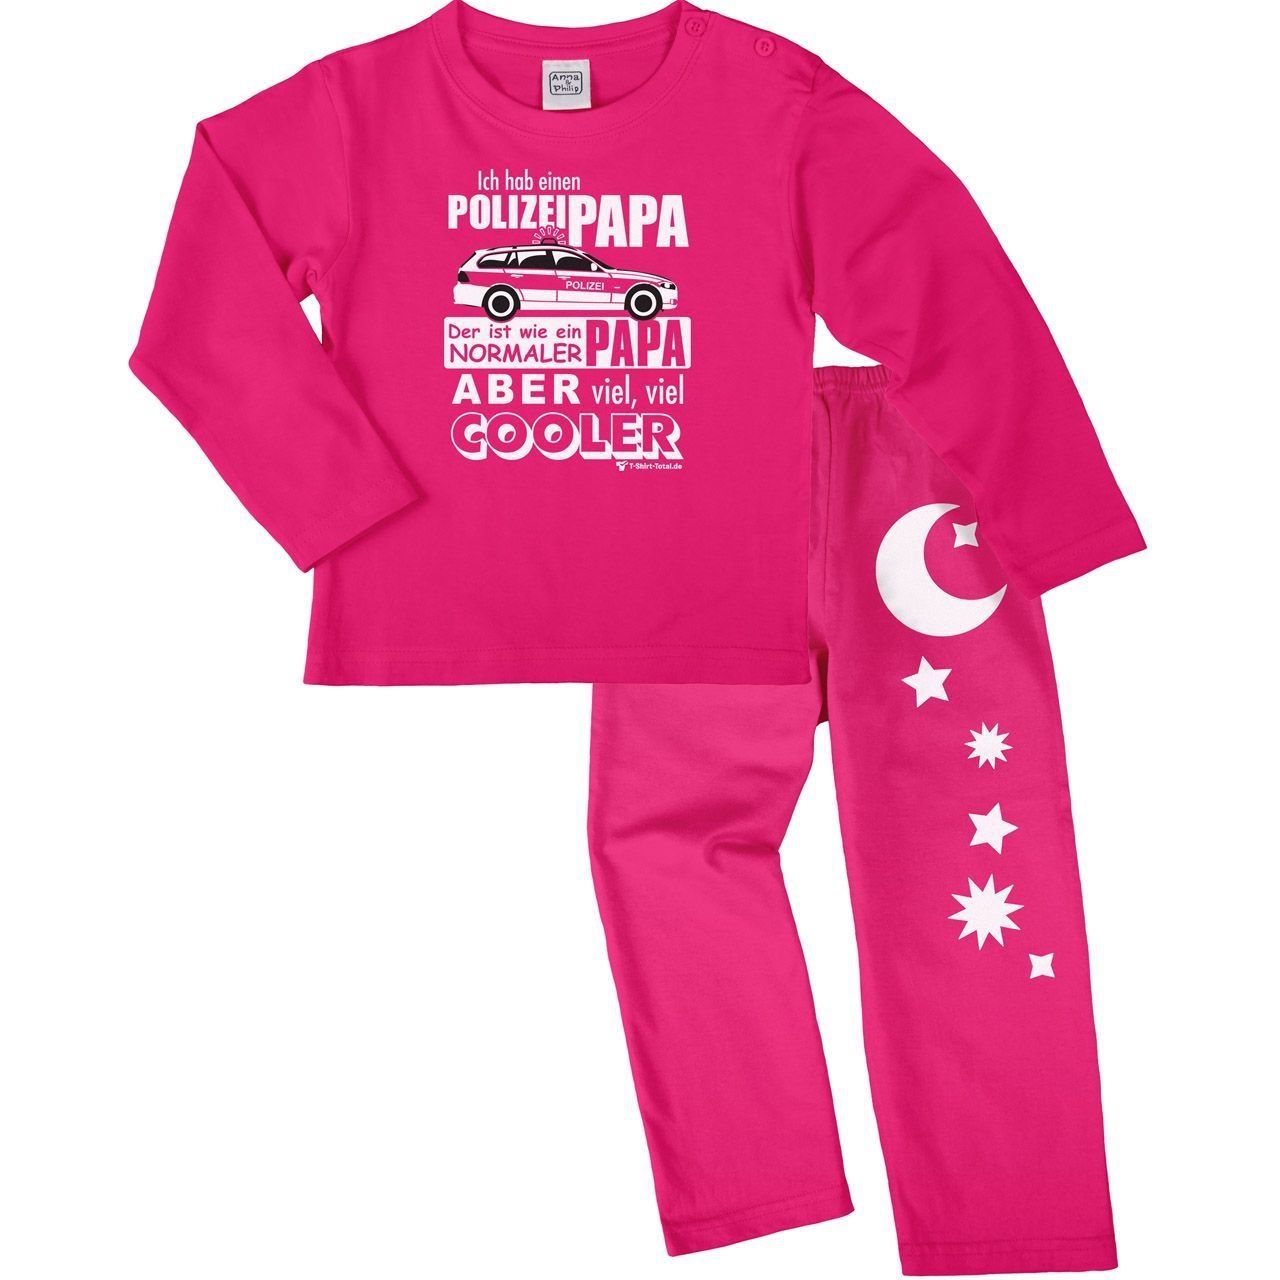 Polizei Papa Pyjama Set pink / pink 110 / 116